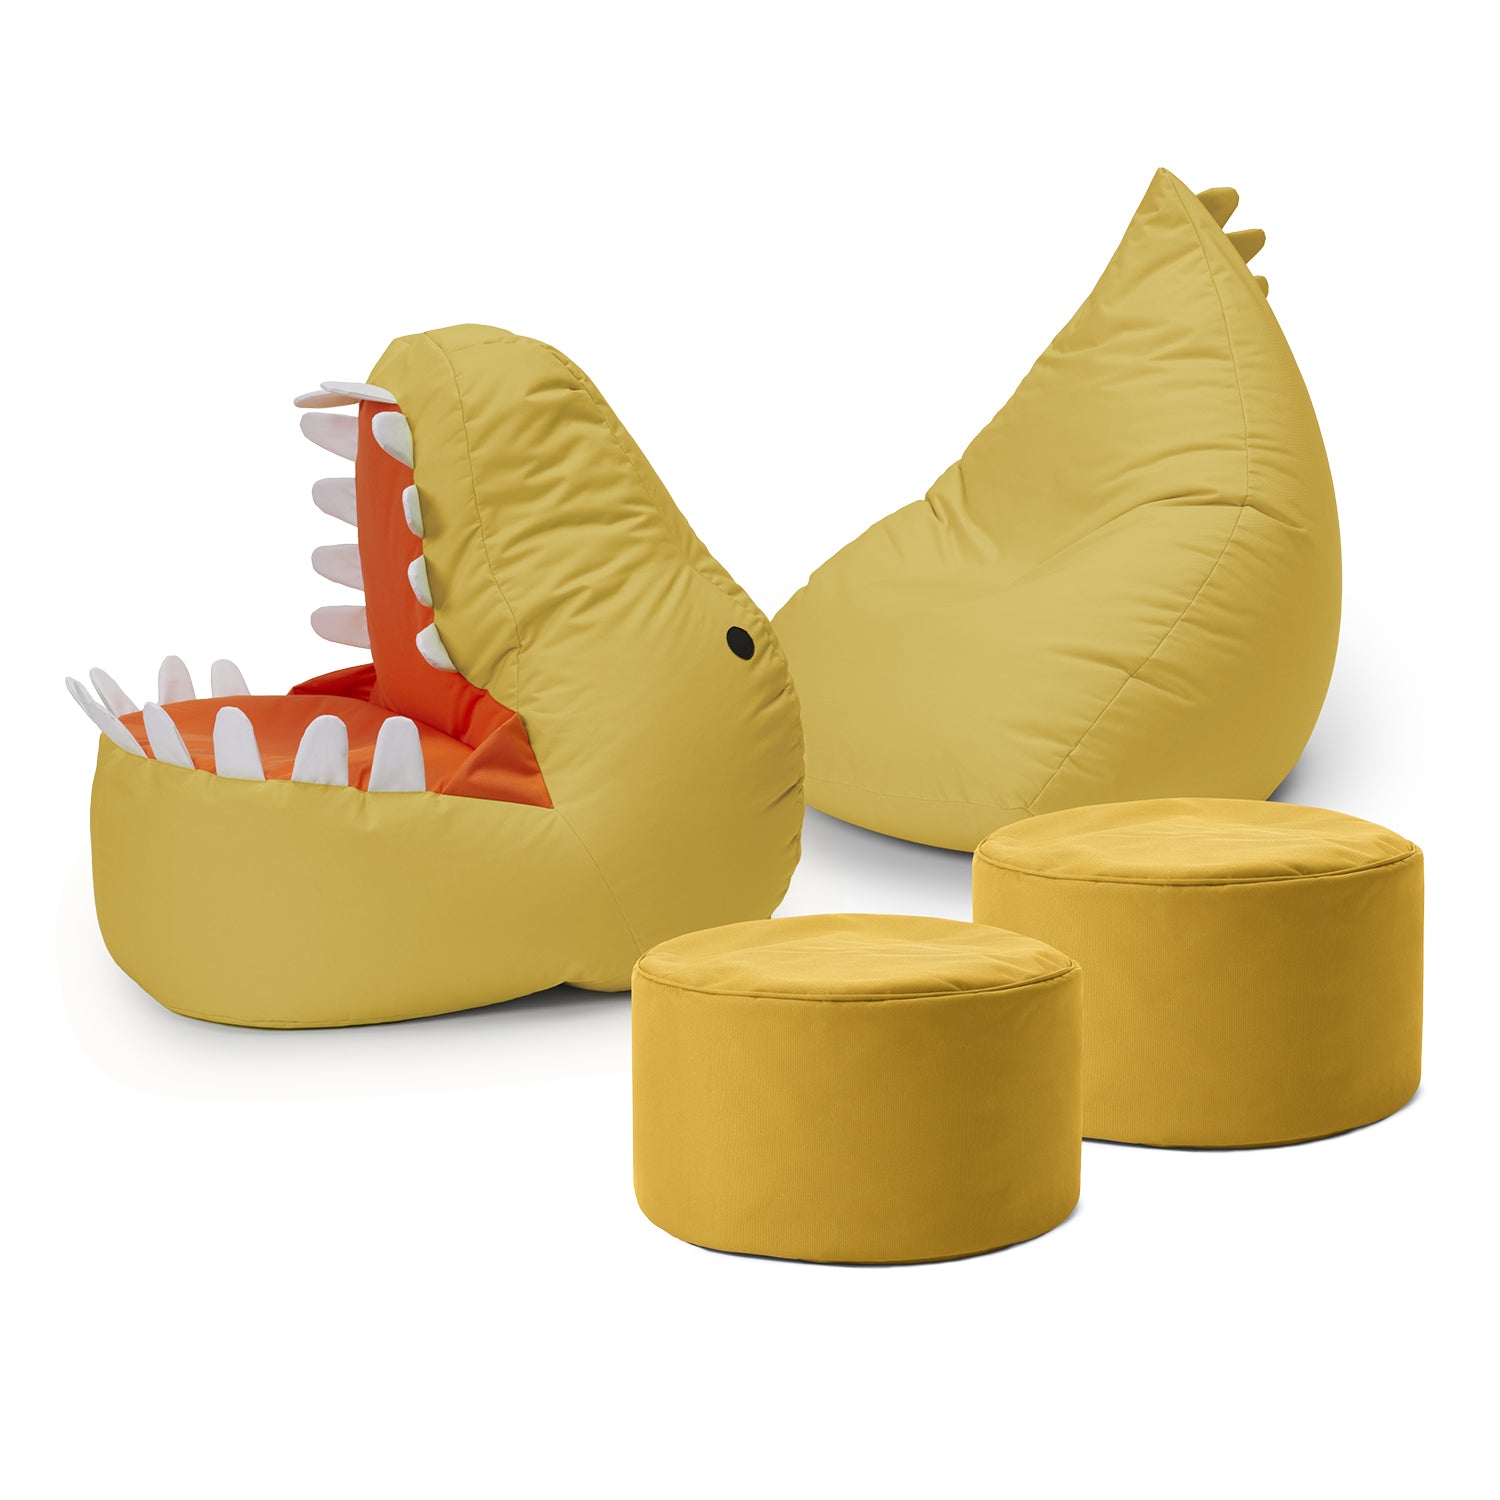 Kindersitzsack-Set "Dino" (4-tlg.) - indoor & outdoor - Senfgelb von LUMALAND